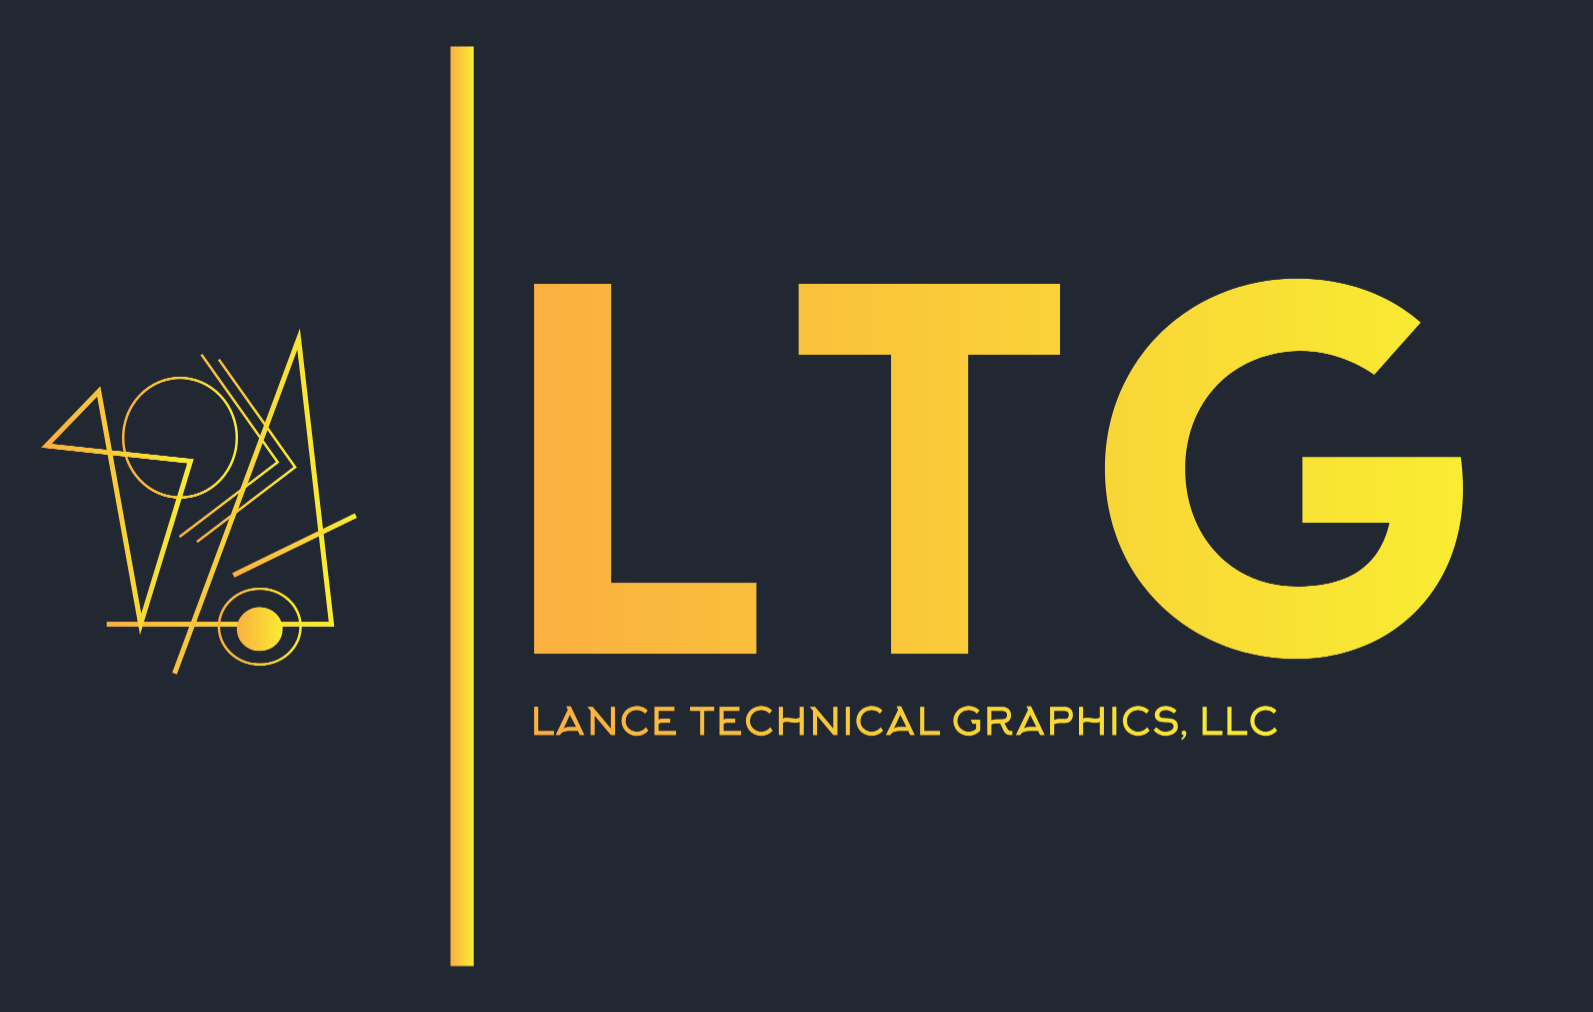 Lance Technical Graphics, LLC